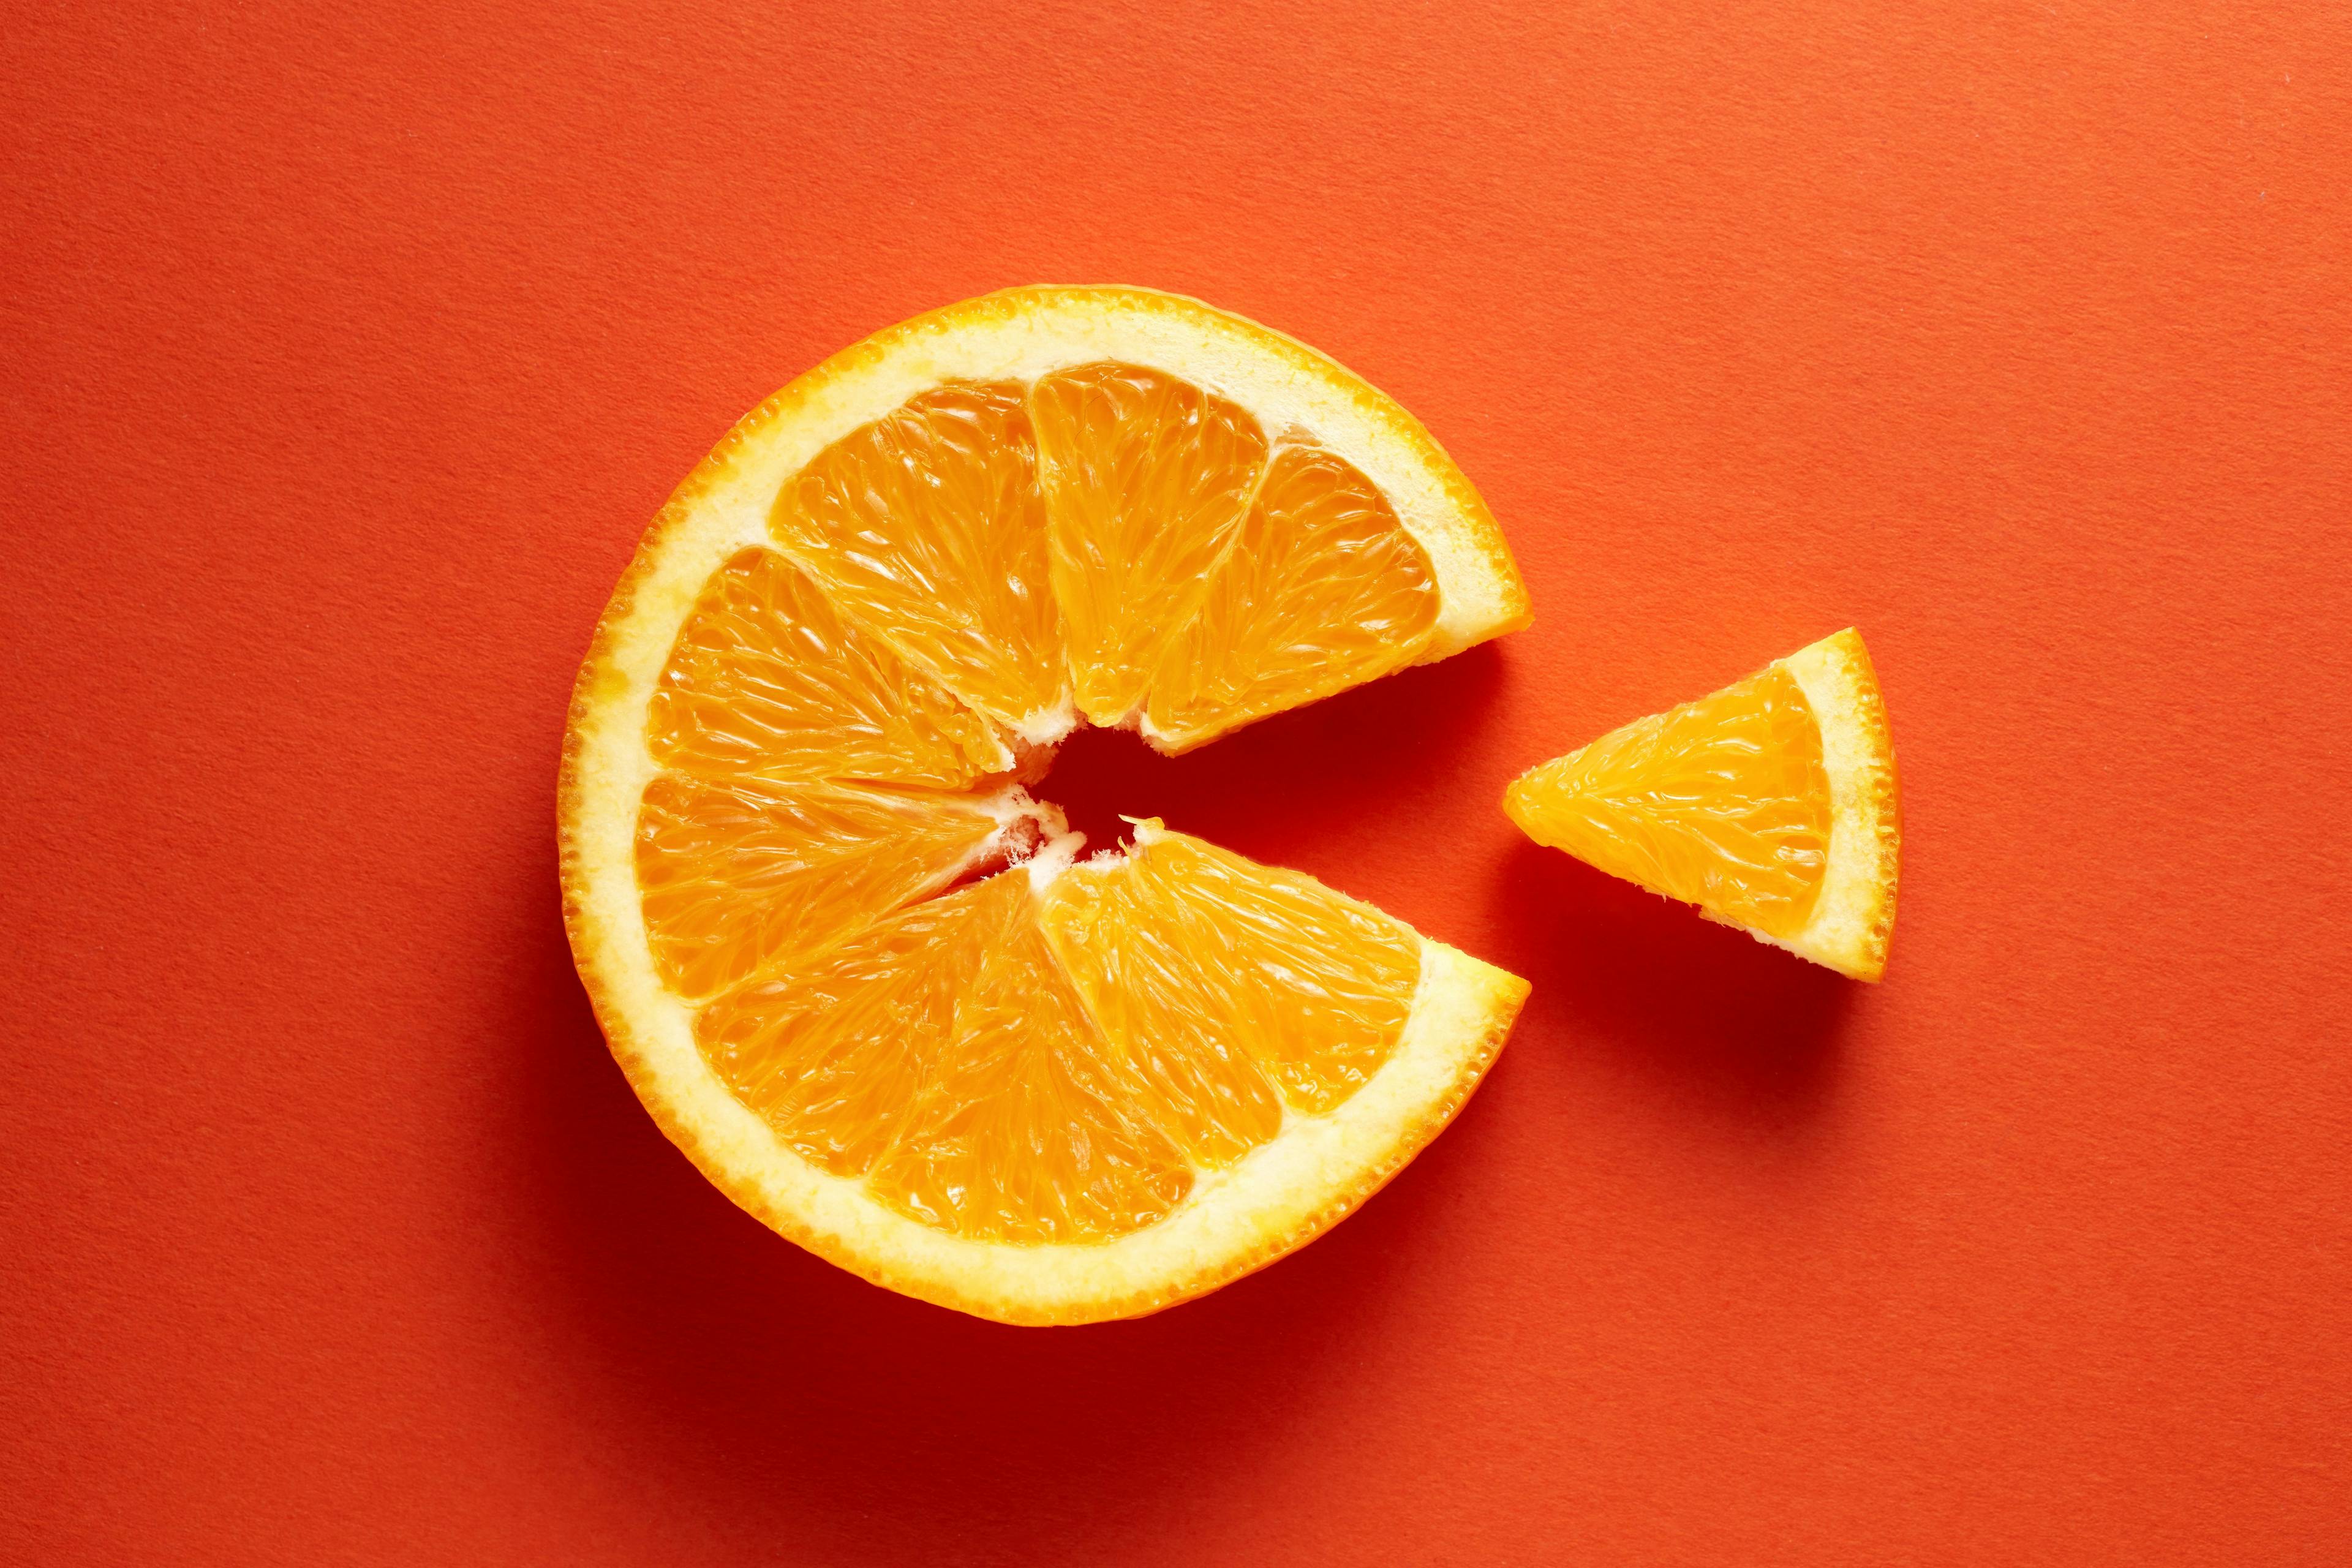 Orange slice symbolizing vitamin c is eating the cut out piece on orange background - Image credit: Cagkan | stock.adobe.com 